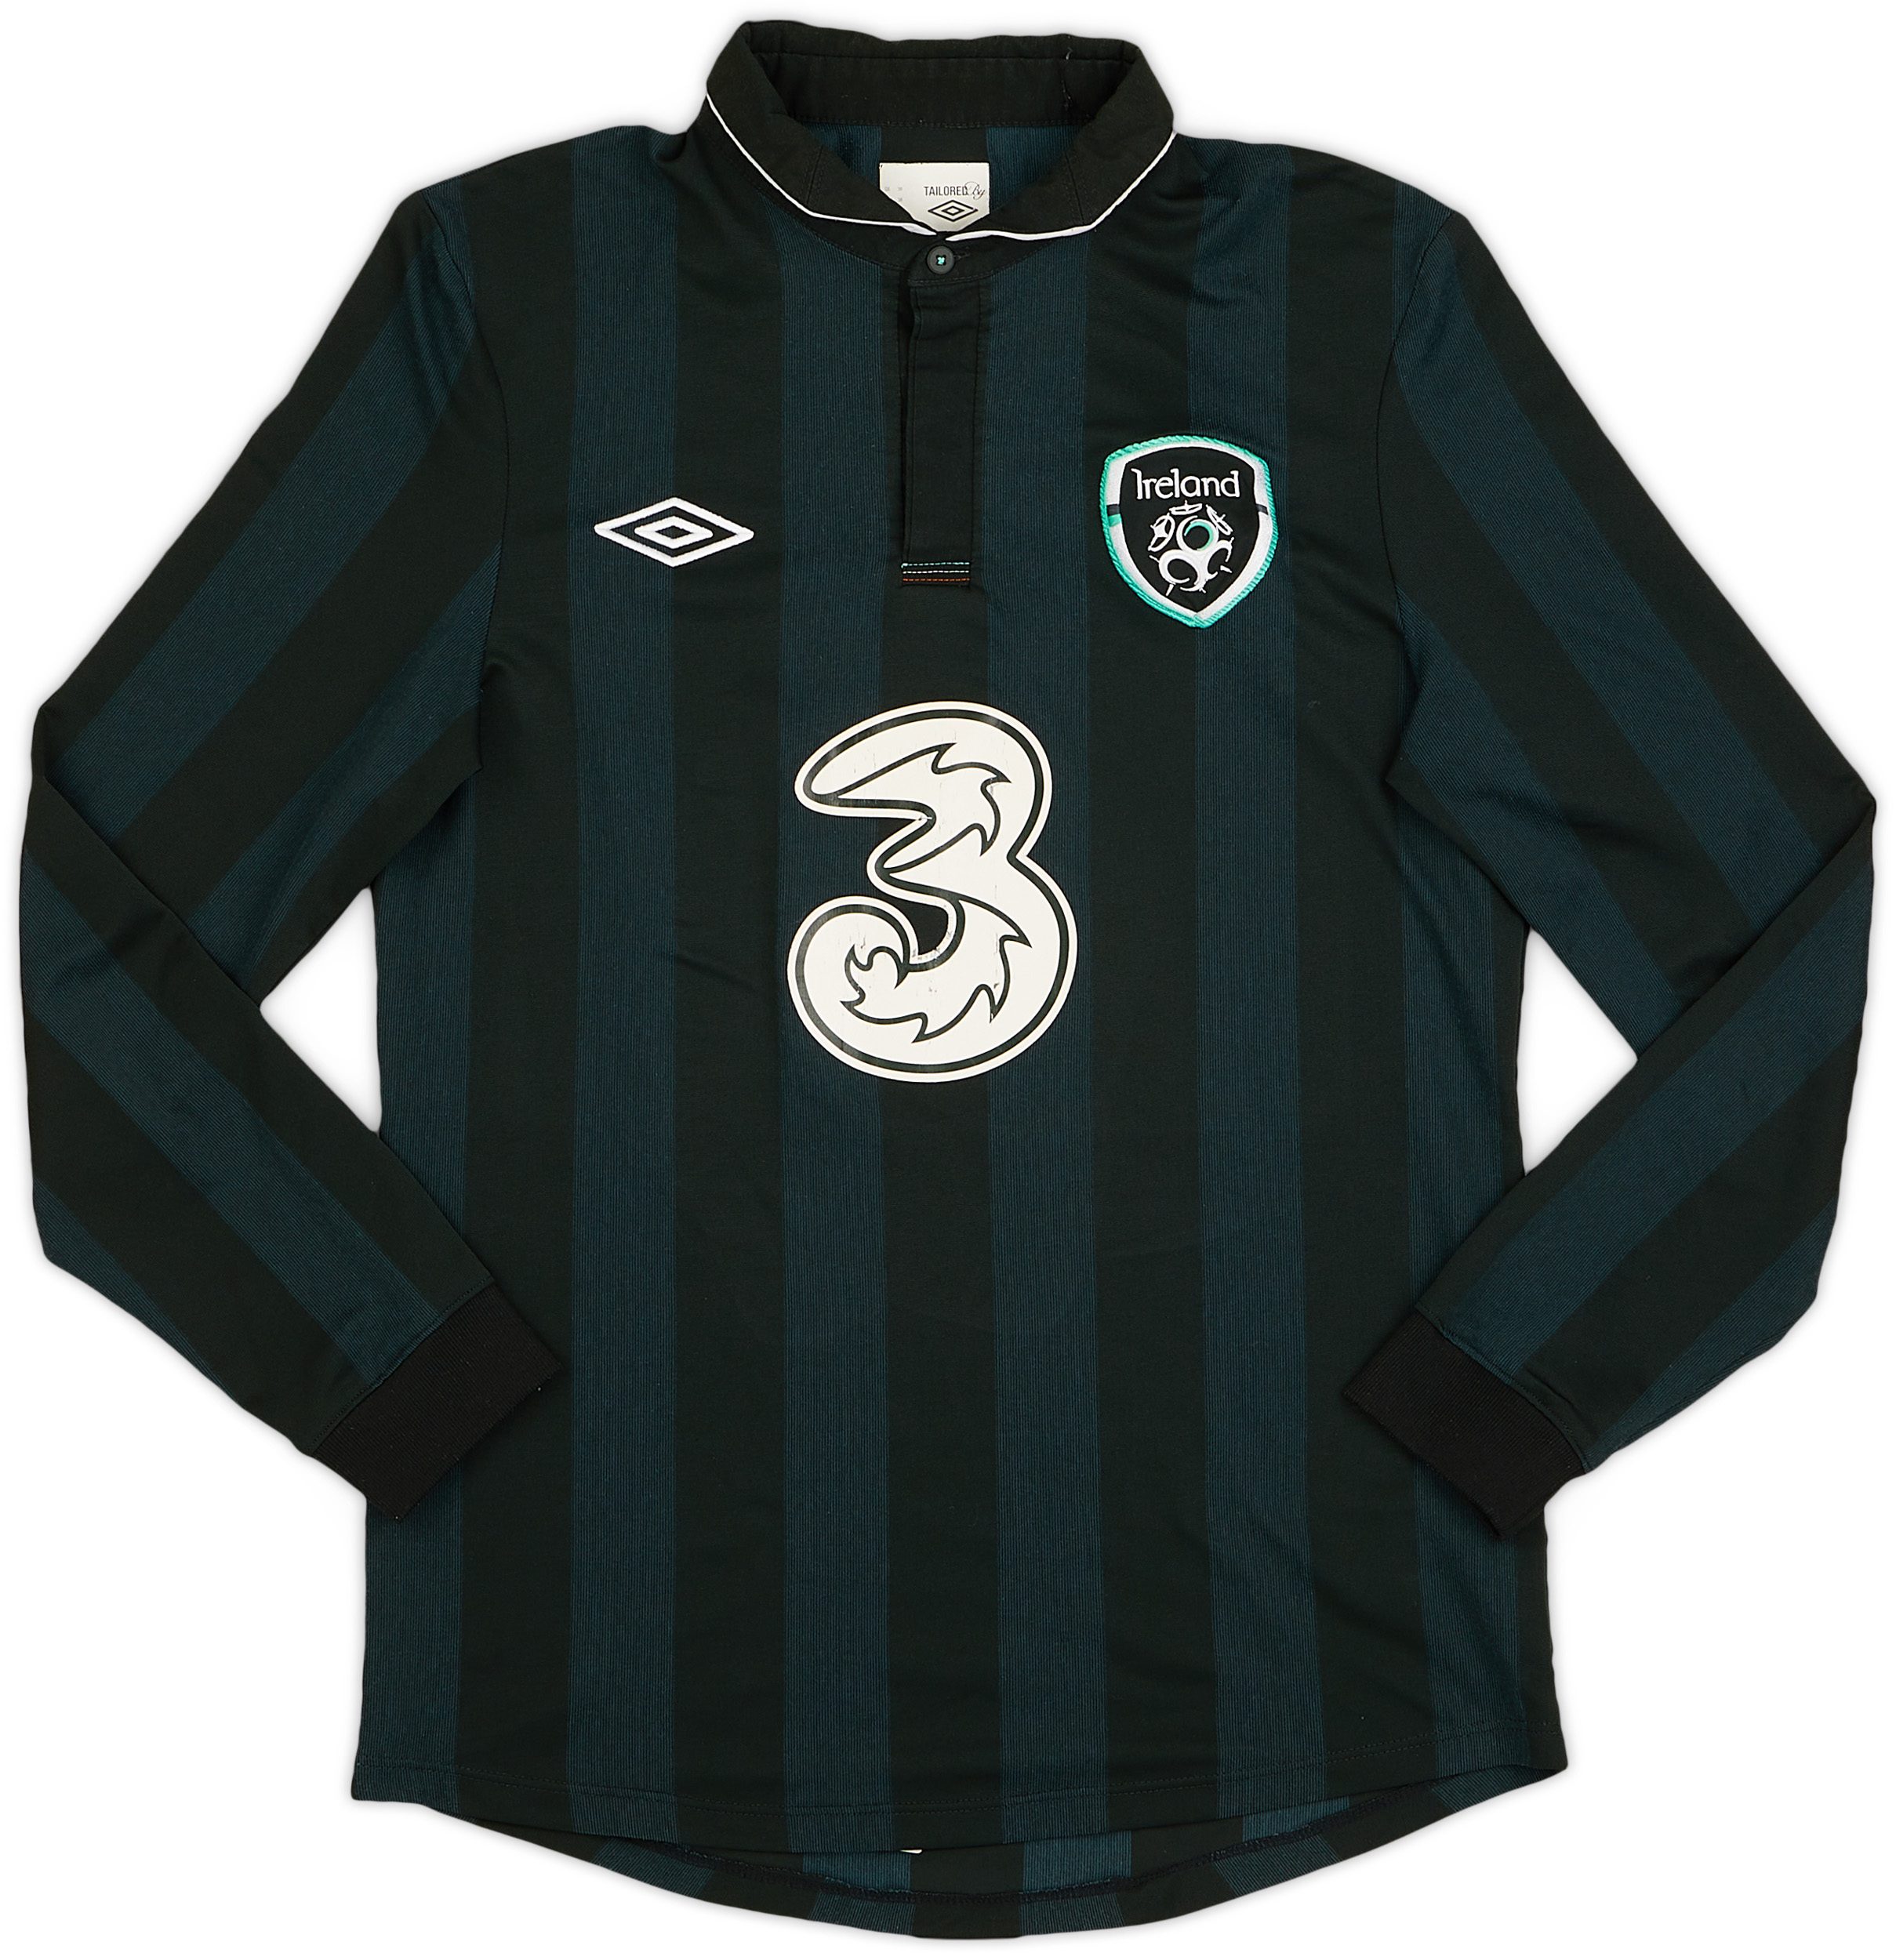 2013-14 Republic of Ireland Away Shirt - 7/10 - ()